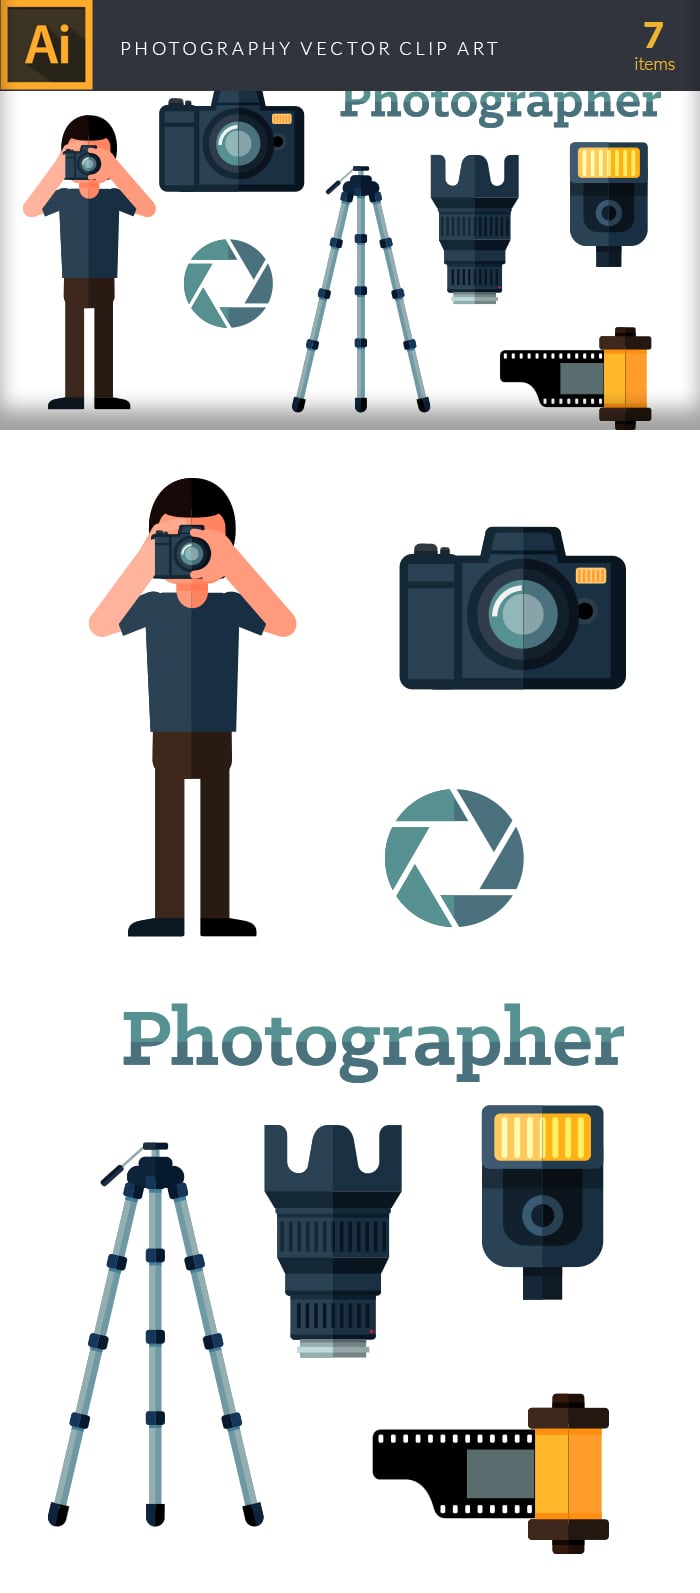 Illustration for photographers.